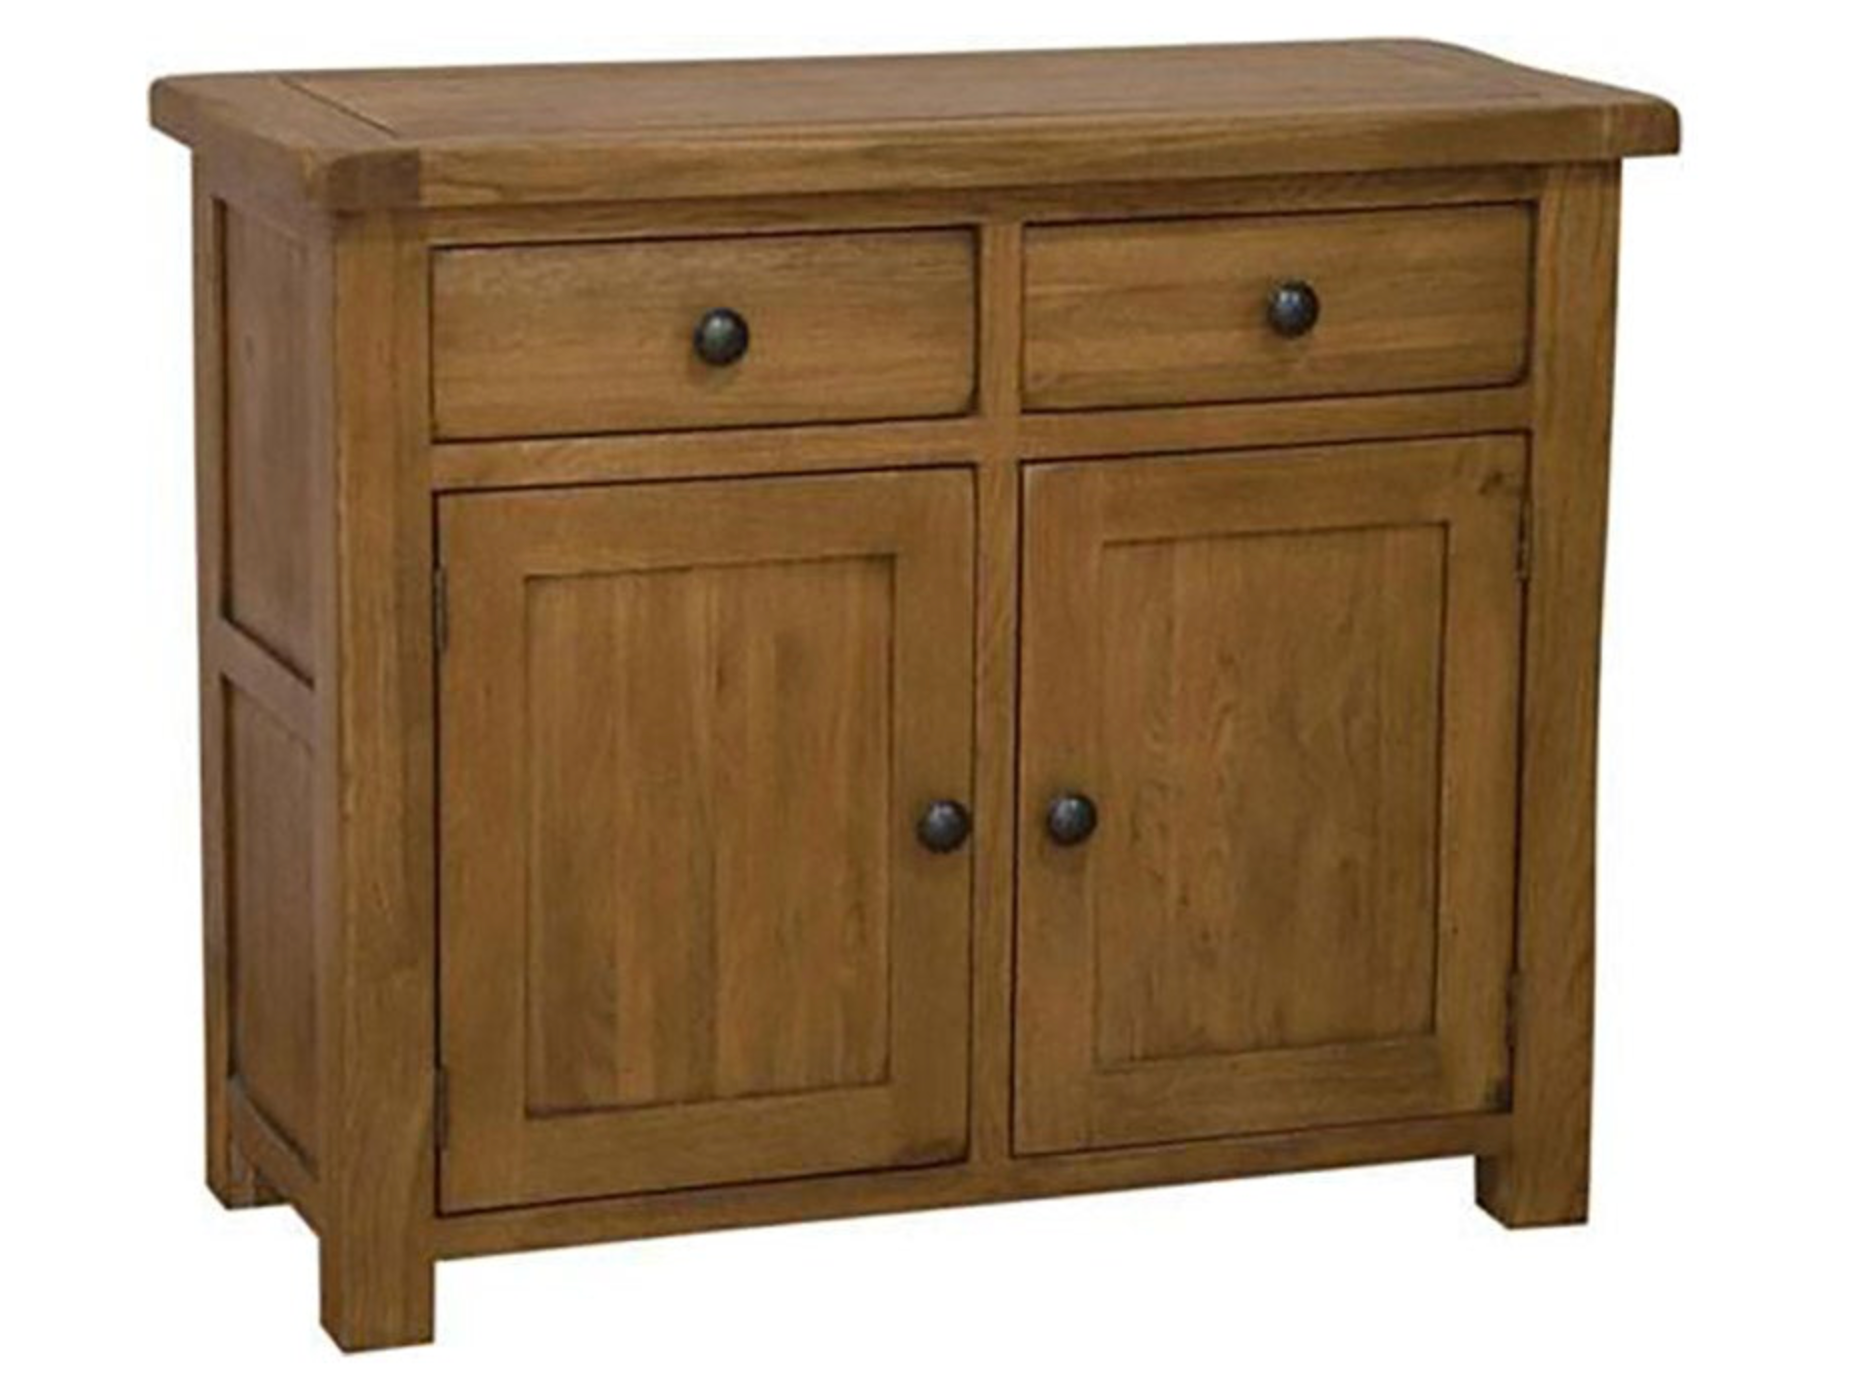 Rustic Sideboard- Solid Oak Furniture